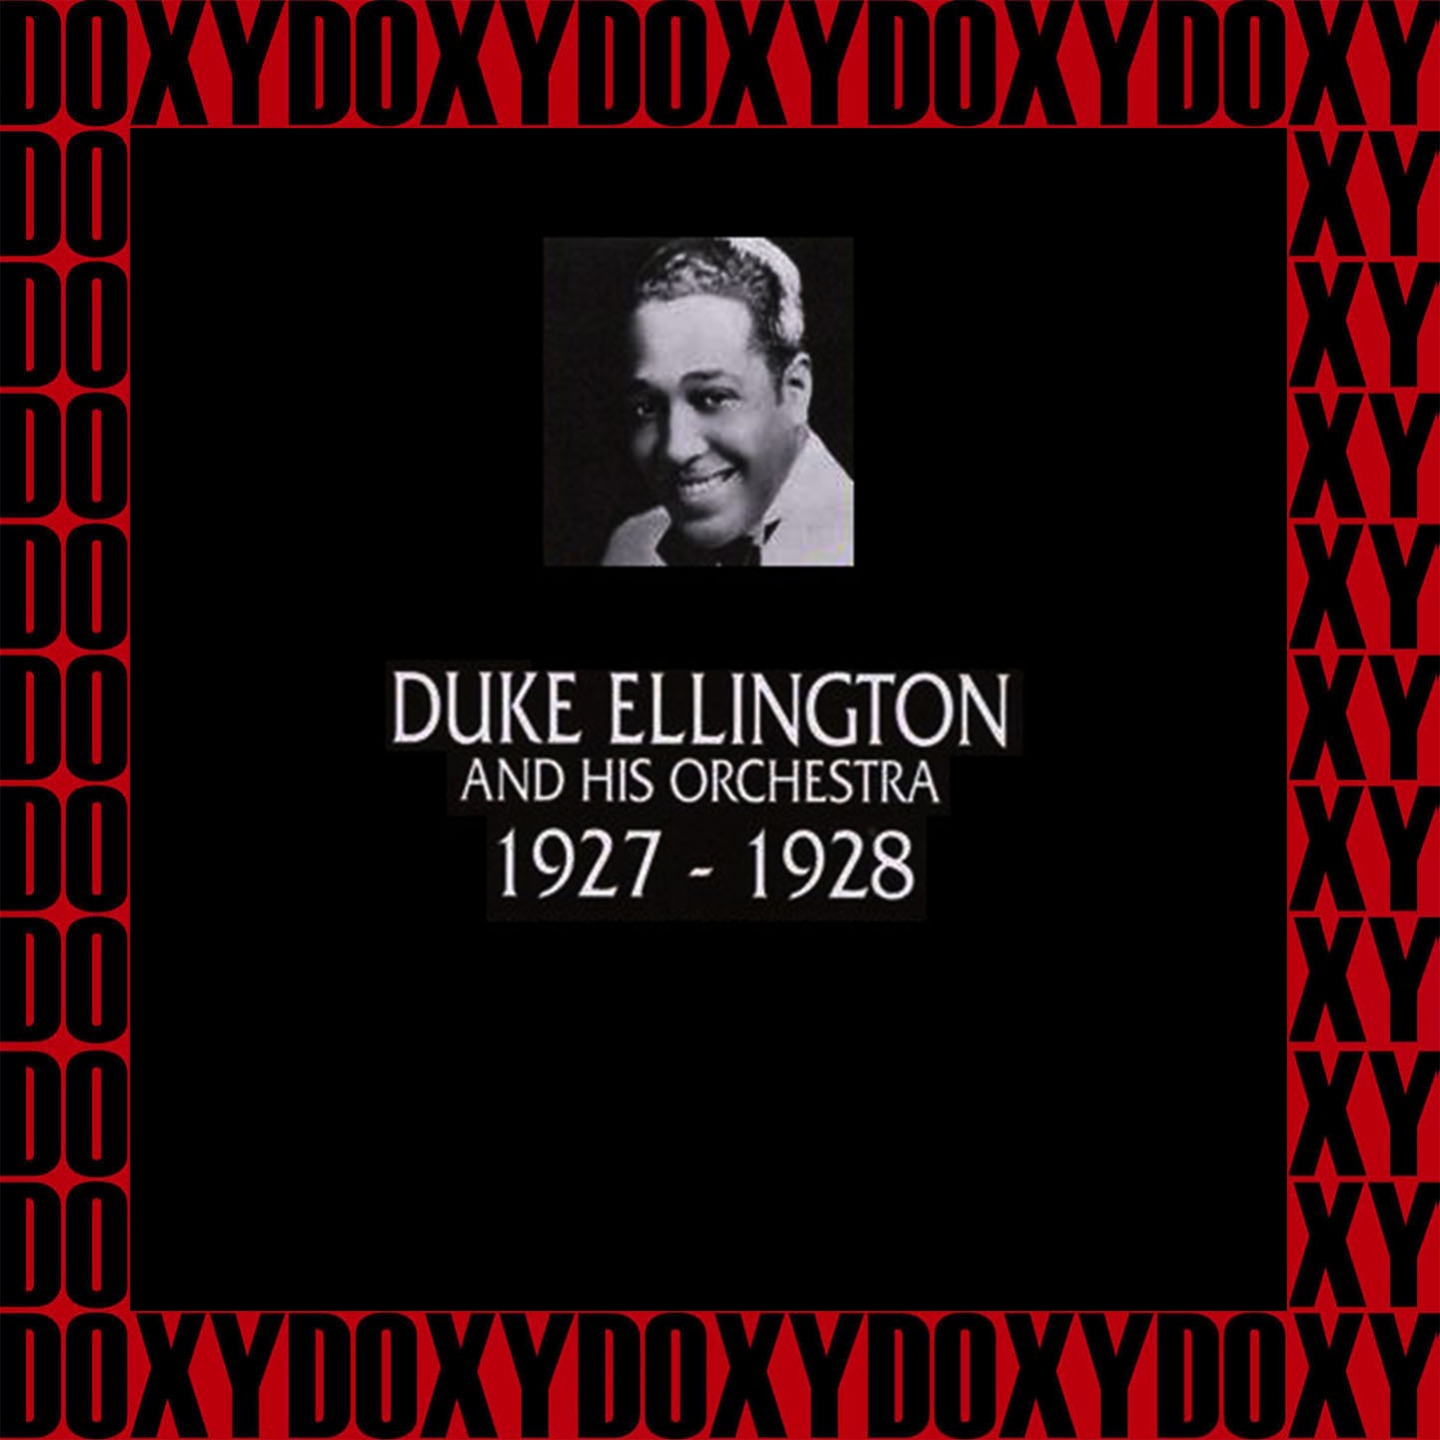 Duke Ellington - 1927-1928 (Remastered Version) (Doxy Collection)